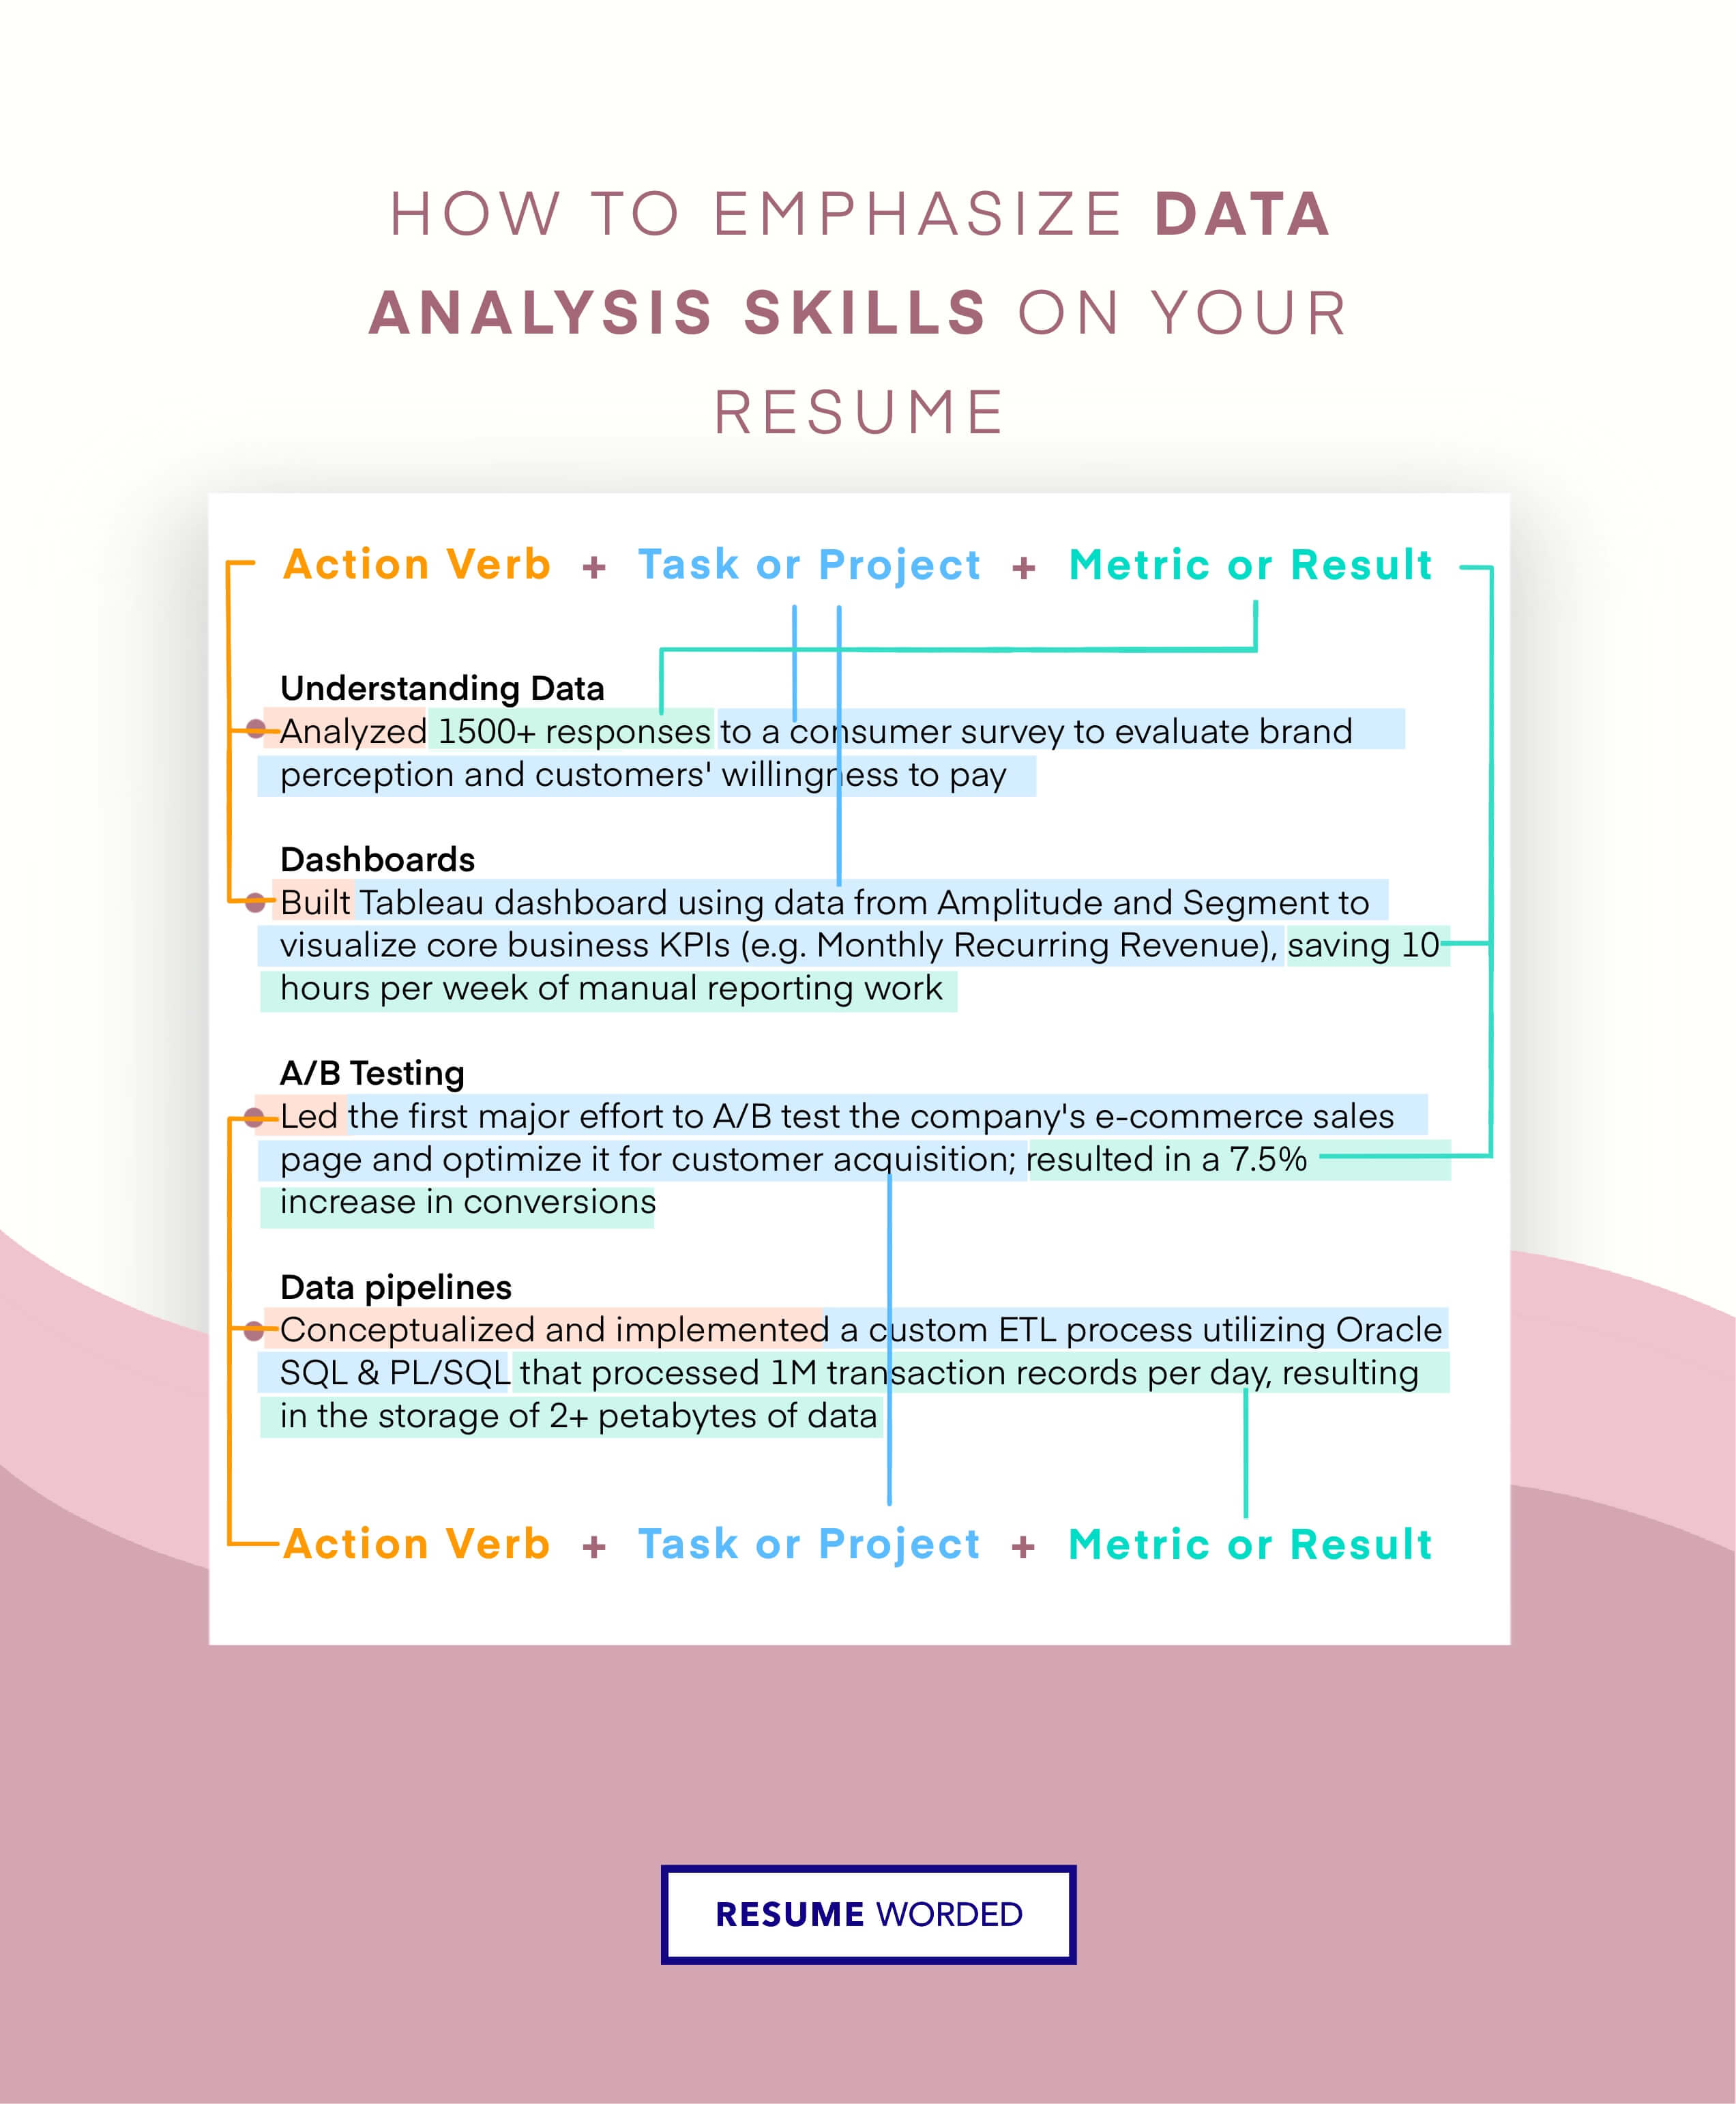 Showcase your data analysis skills - Credit Analyst CV